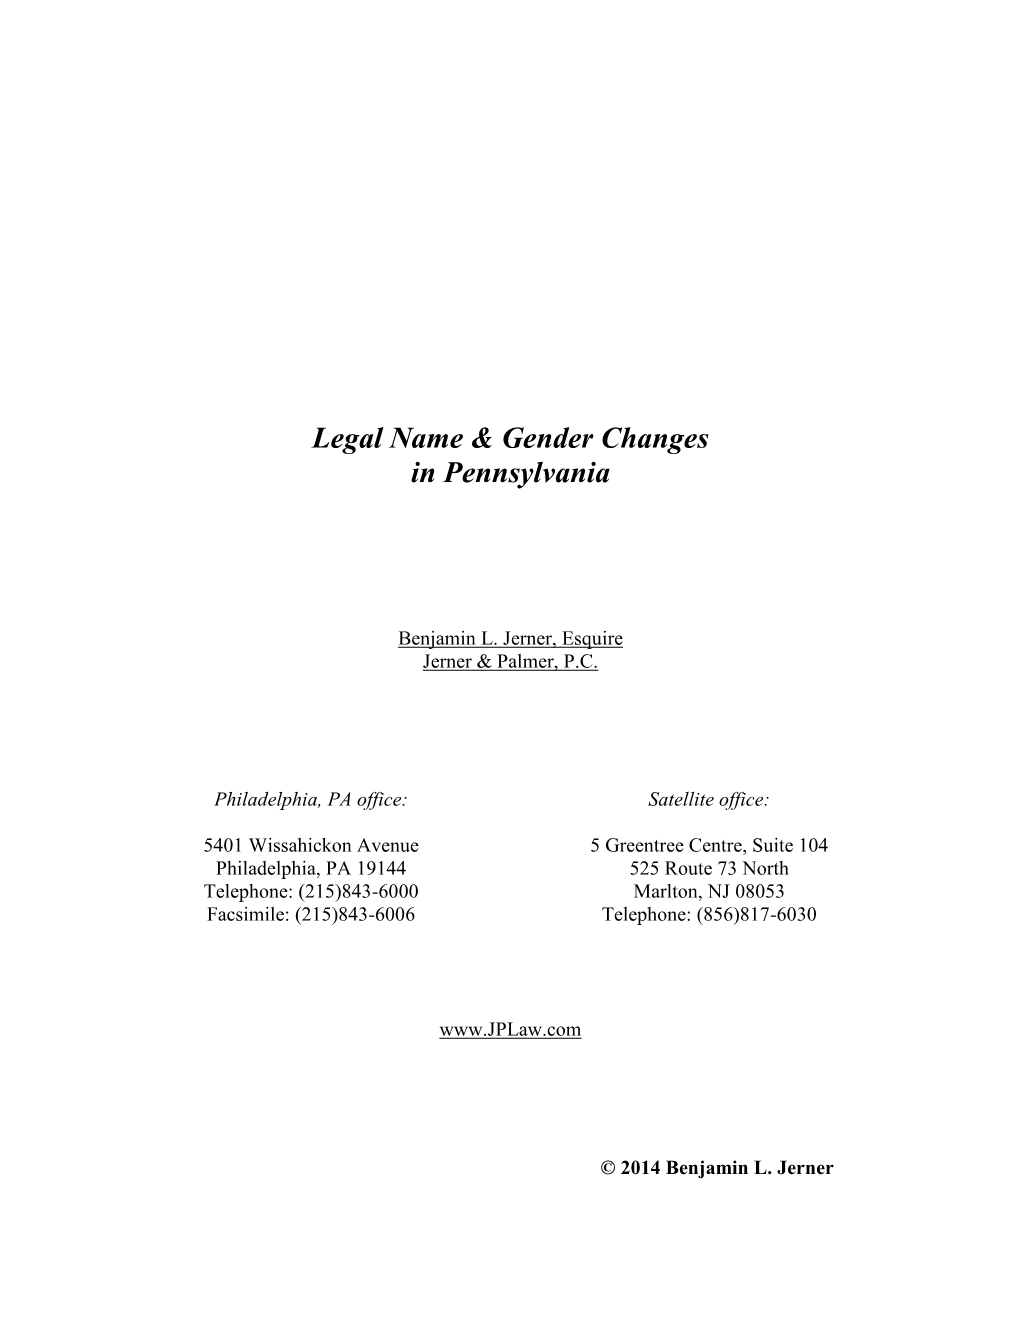 Legal Name & Gender Changes in Pennsylvania